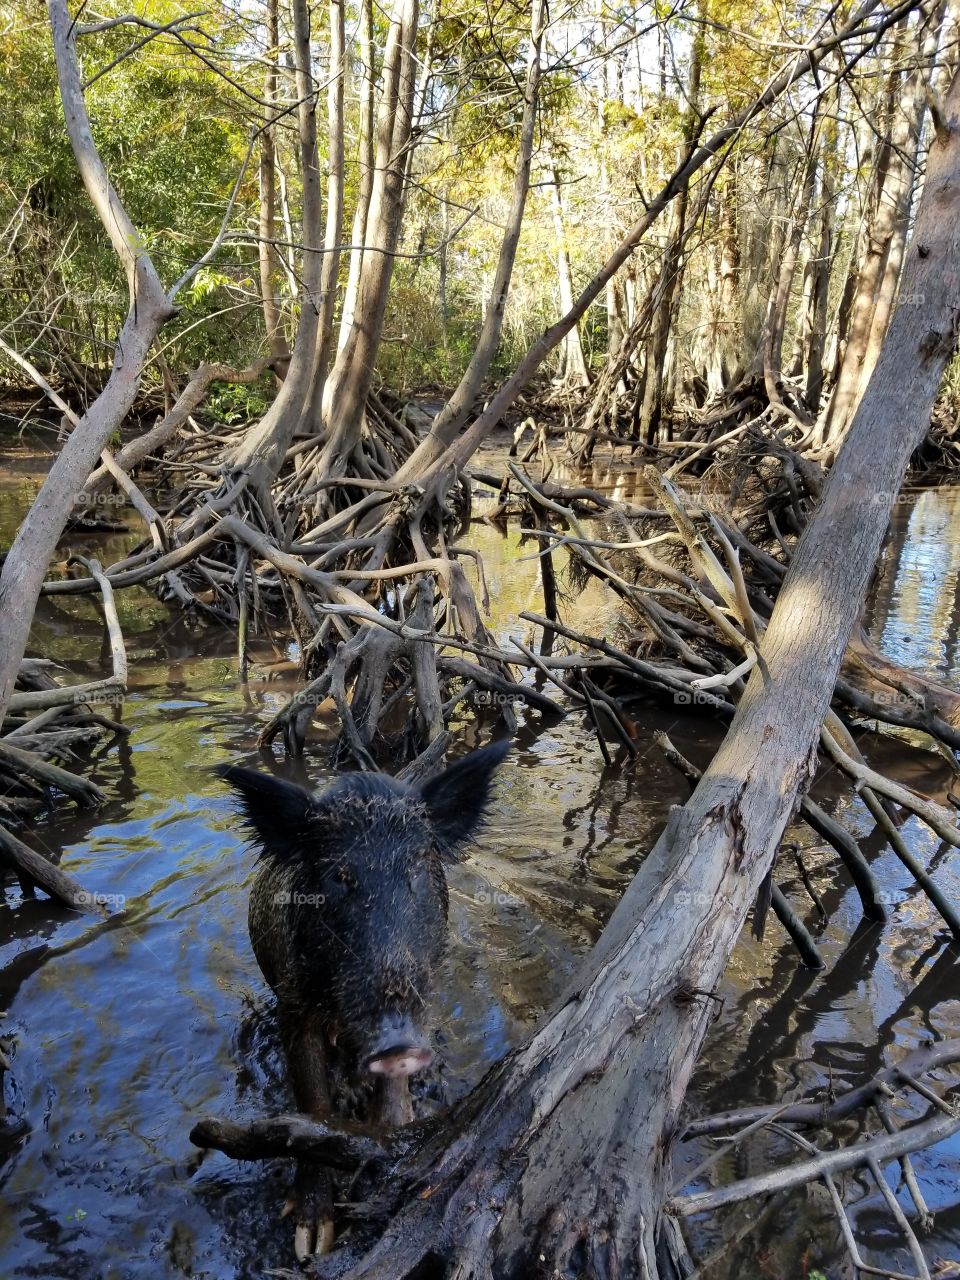 Louisiana swamp tour with wild boar